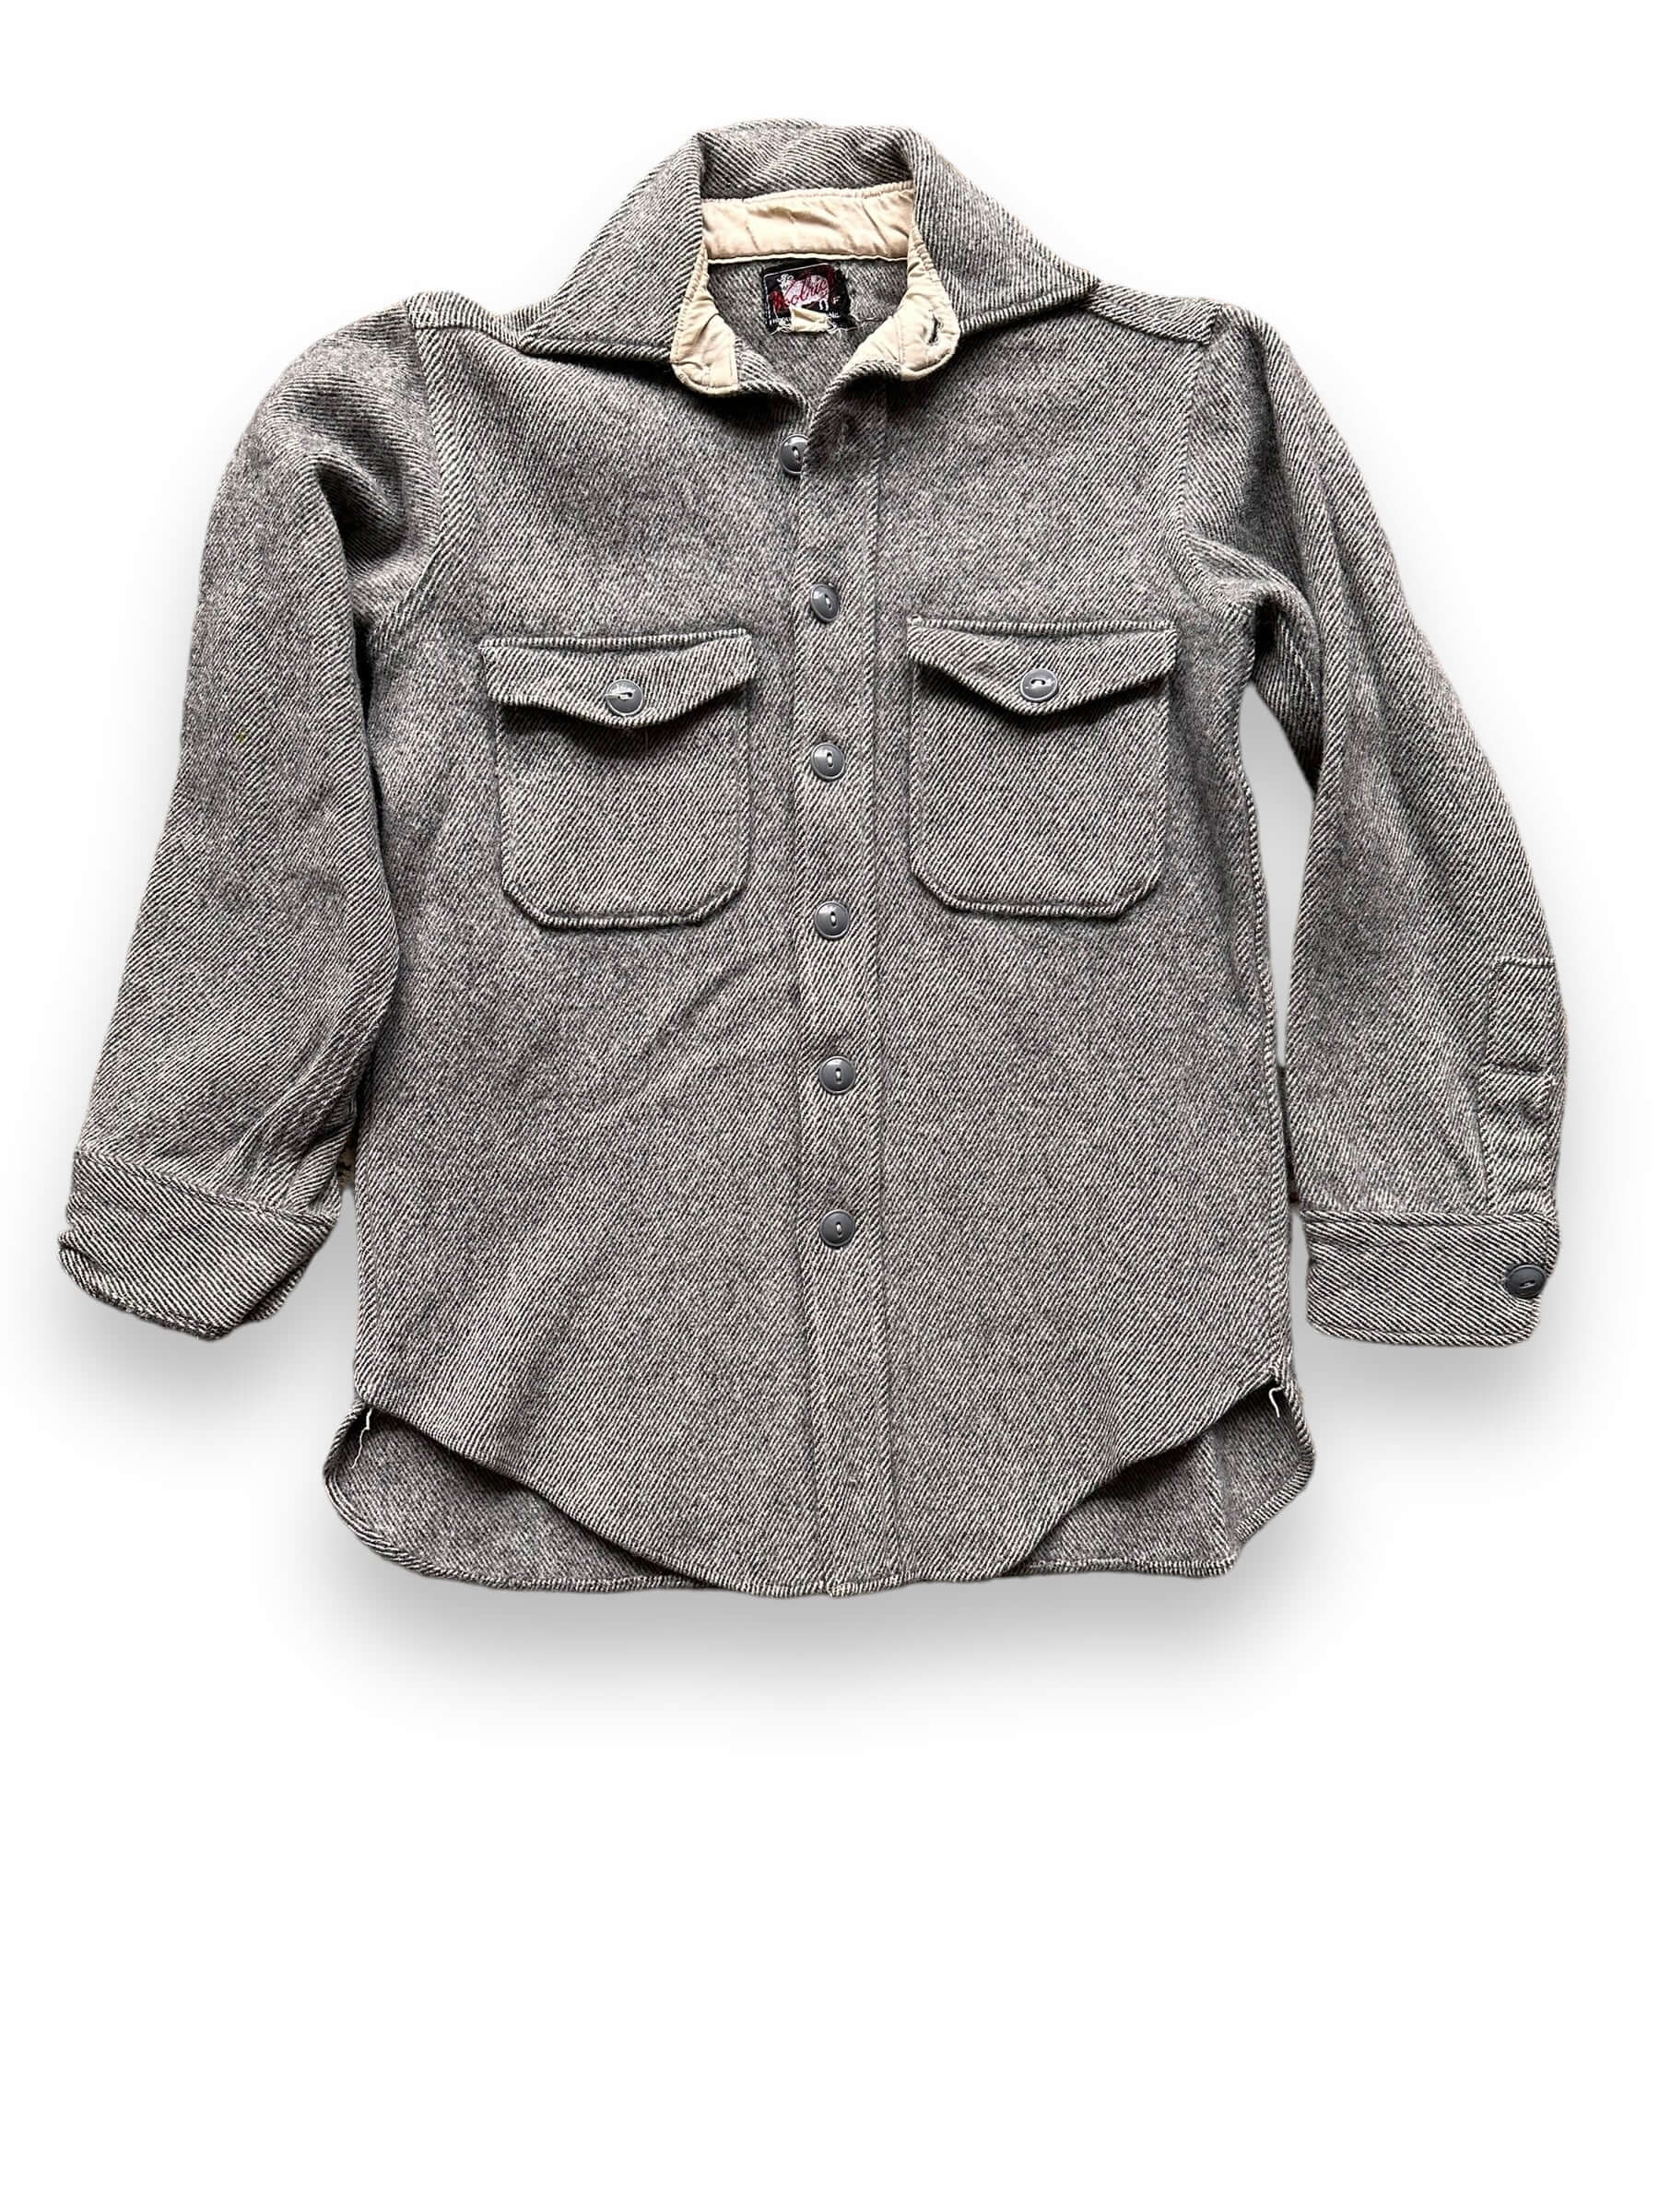 Front View of Vintage Woolrich Shirt Jacket SZ M | Vintage Workwear Seattle